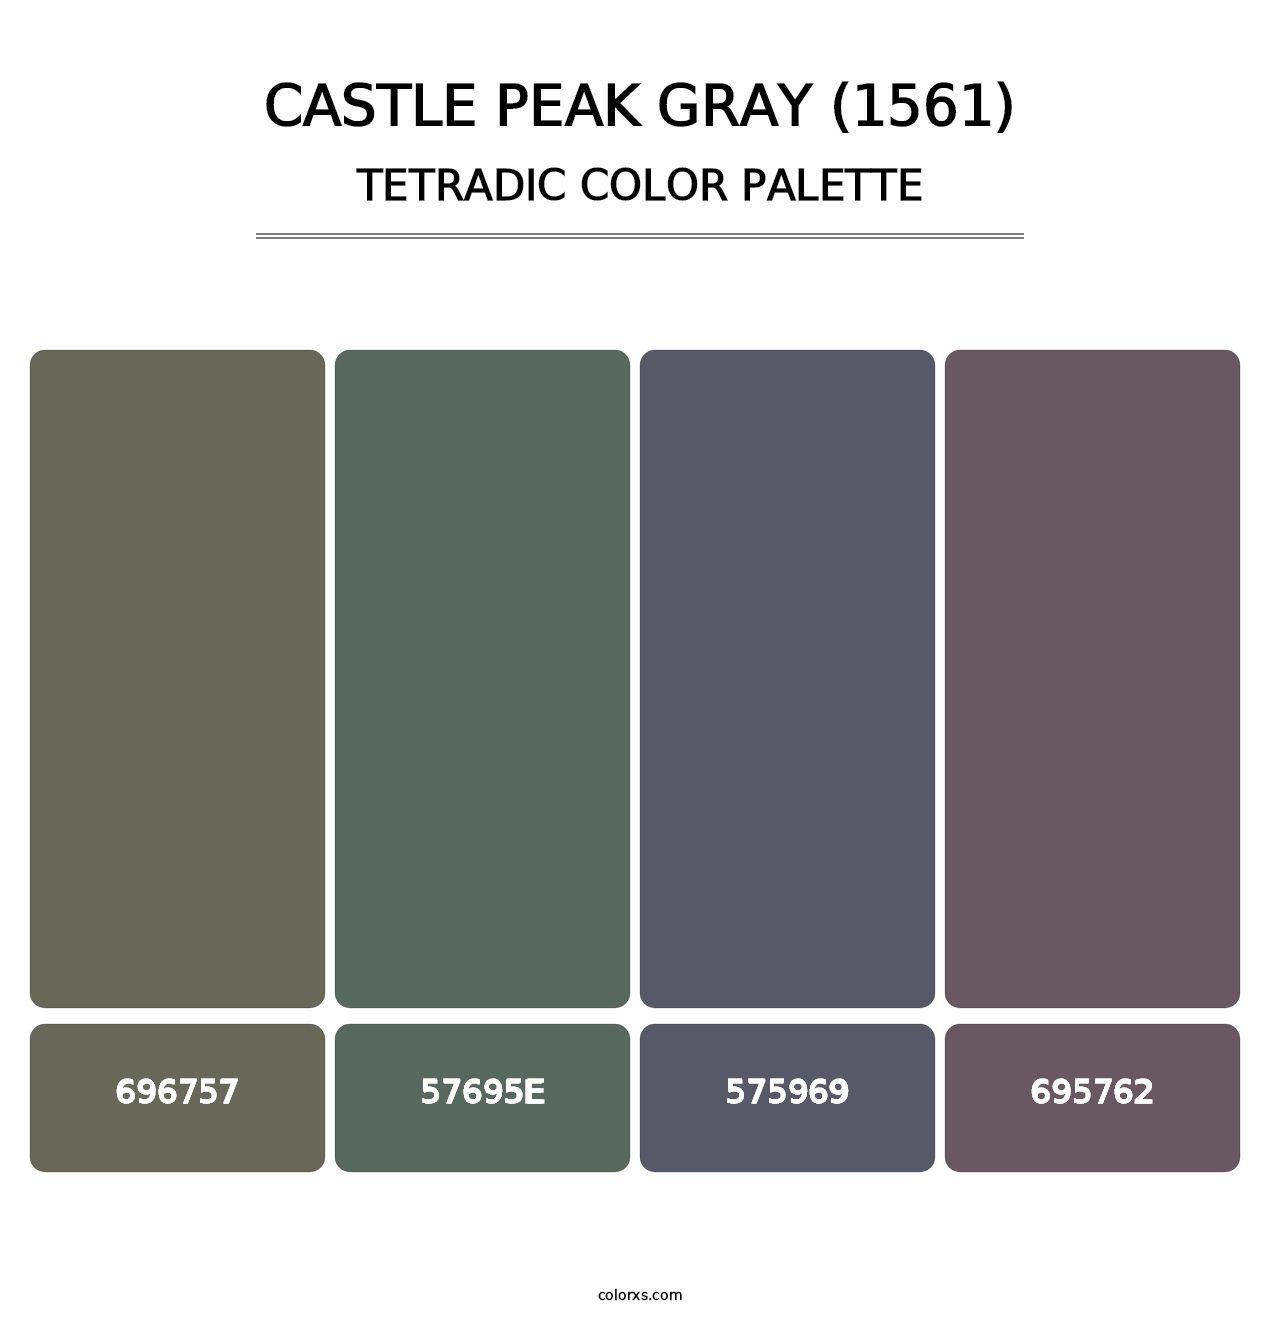 Castle Peak Gray (1561) - Tetradic Color Palette